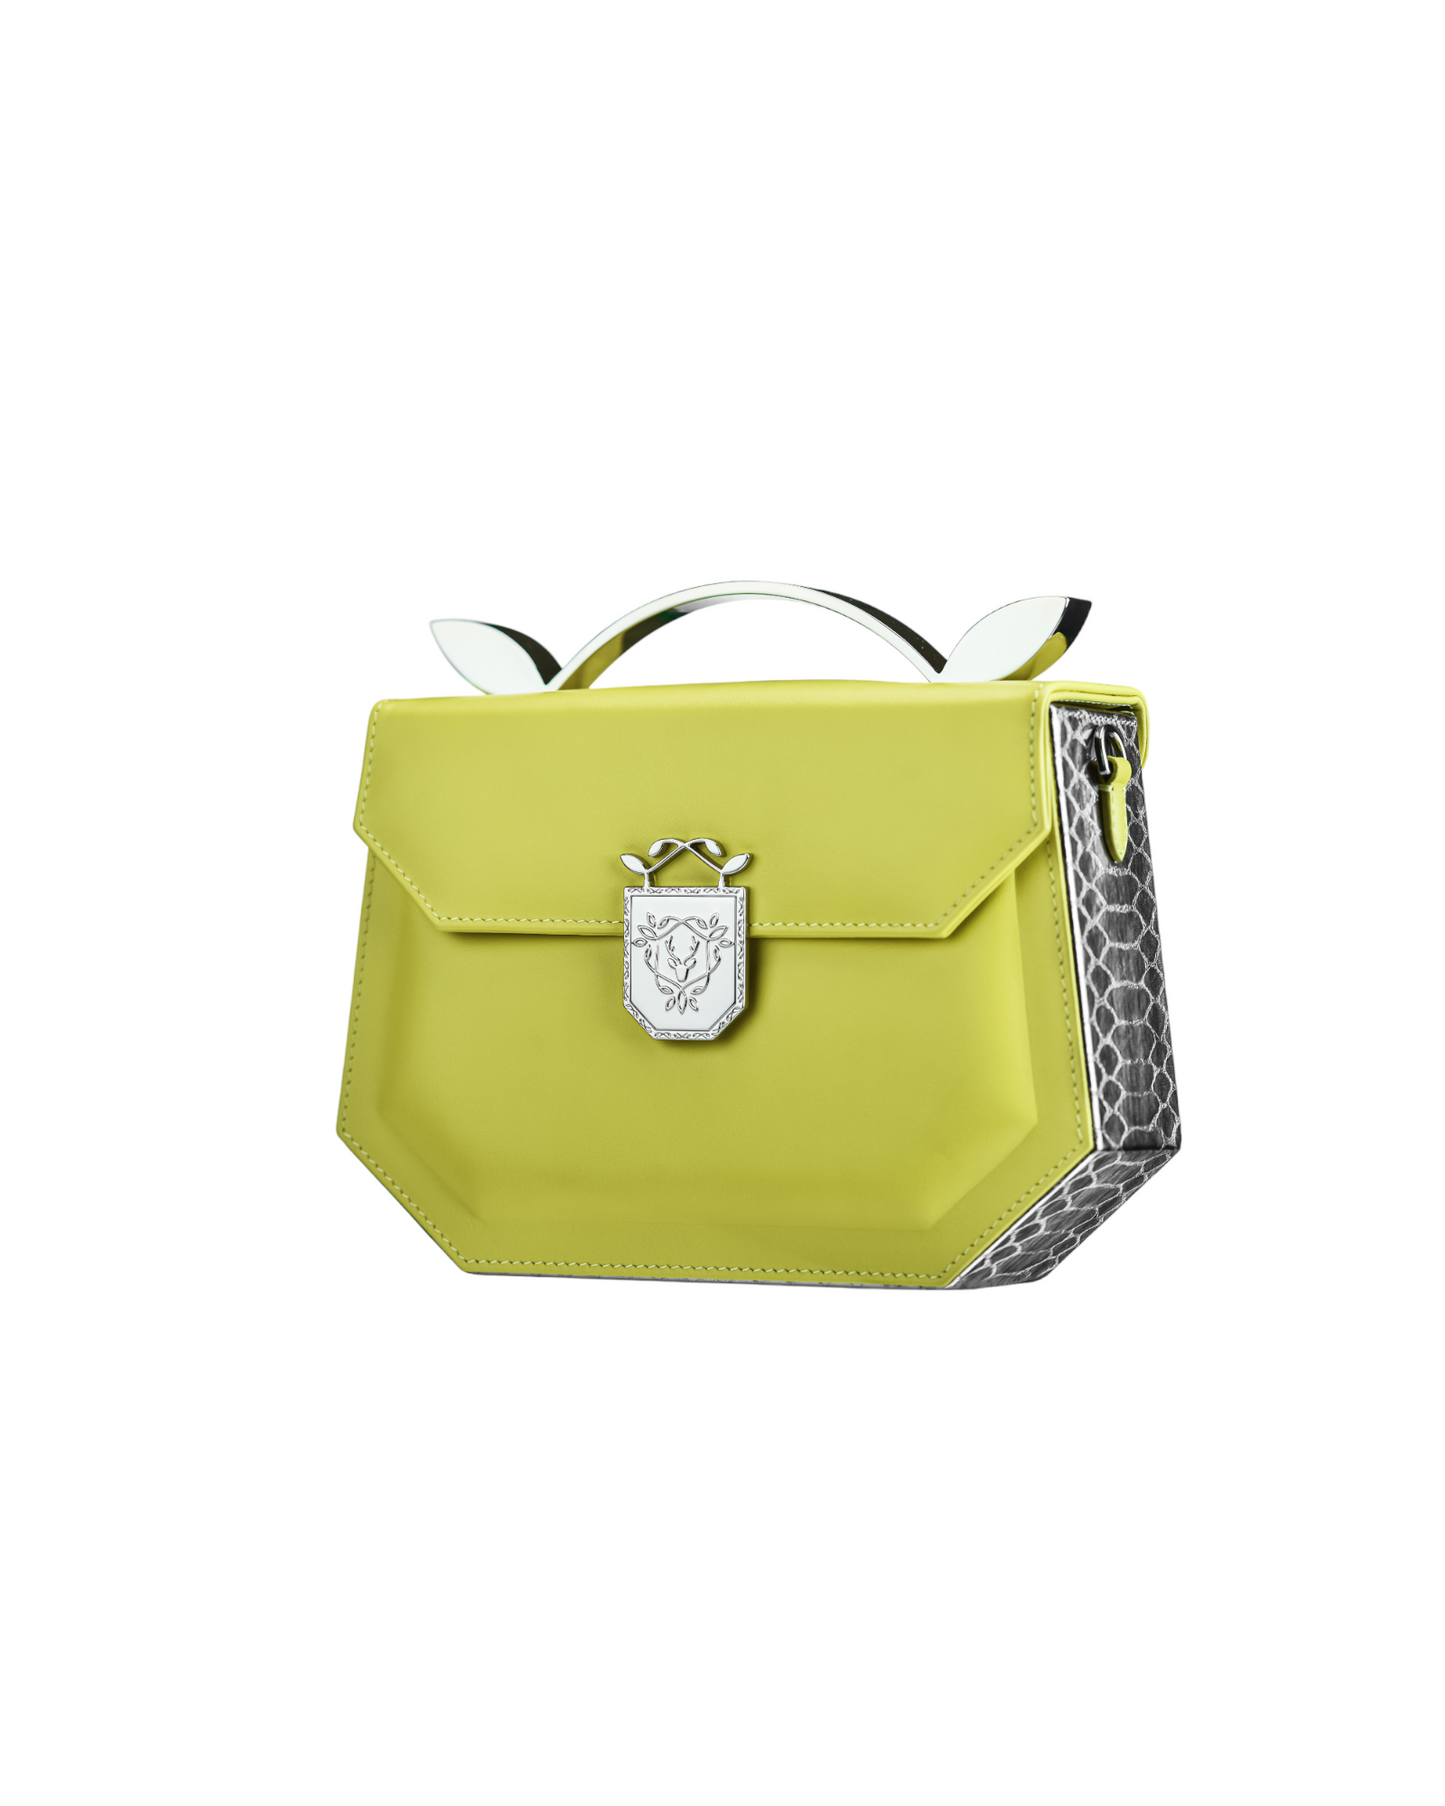 Rania Manasra Shoulder Leather Yellow Bag